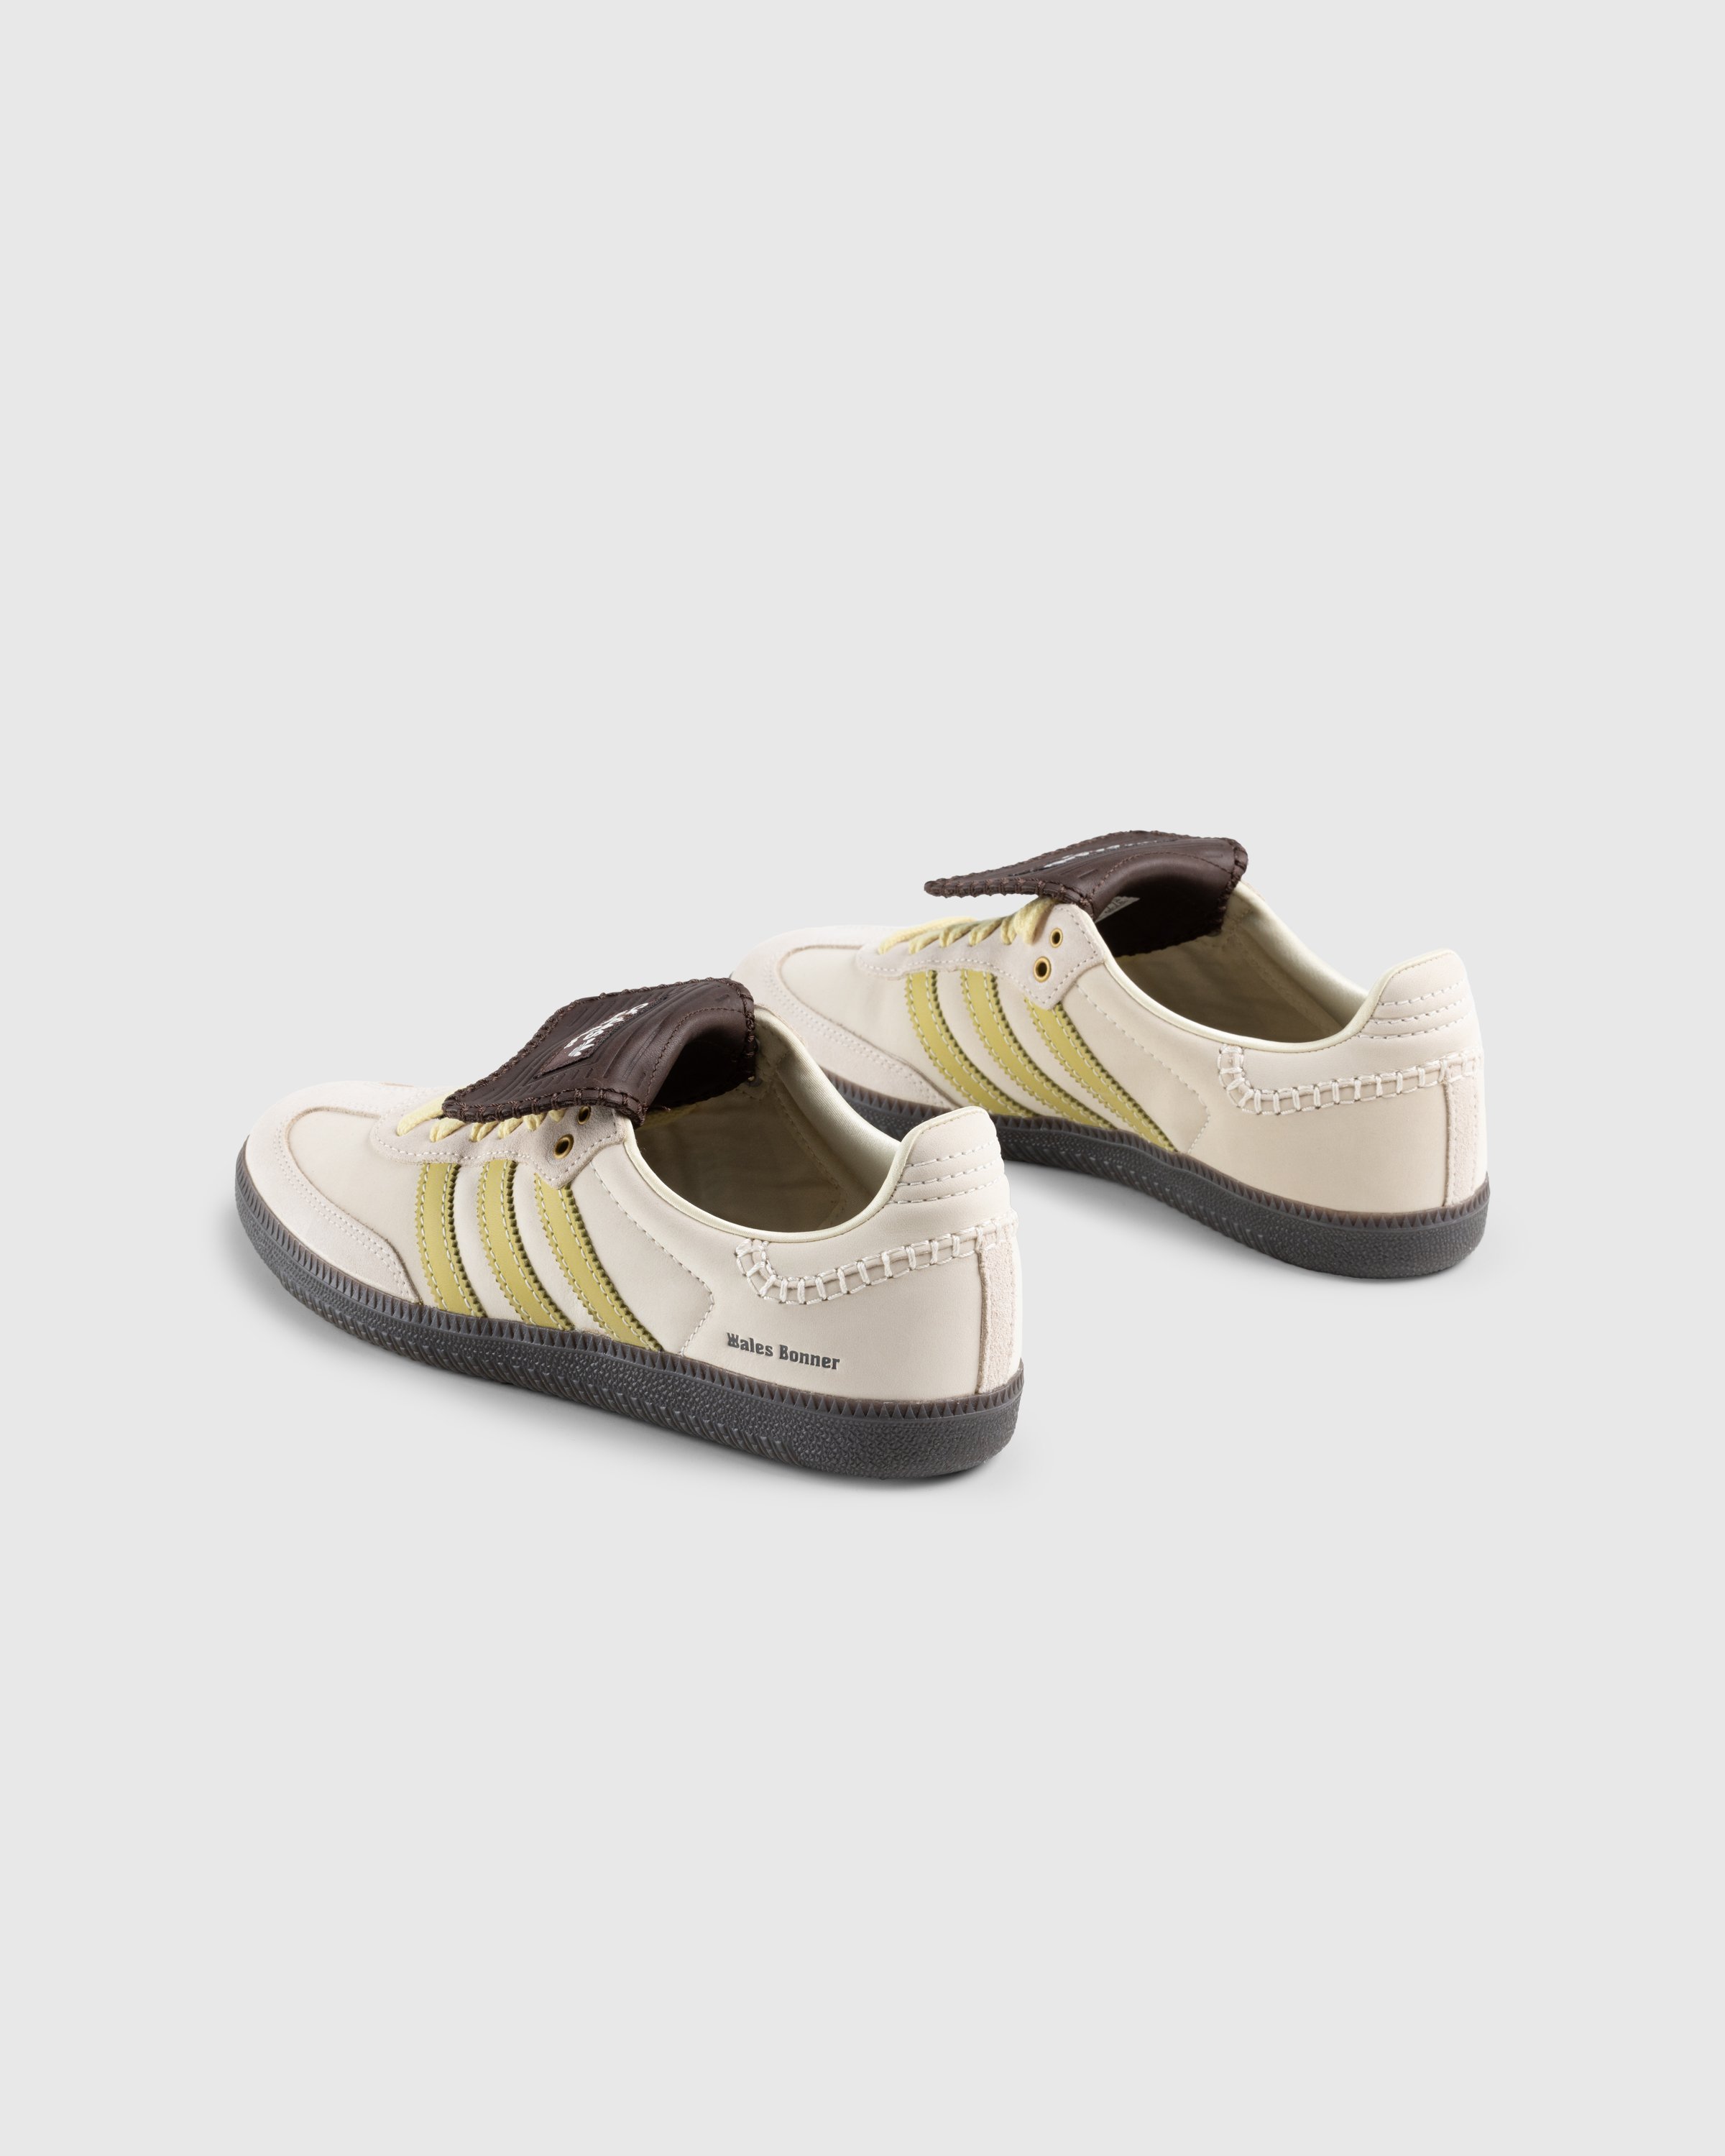 Adidas x Wales Bonner - Samba Nubuck Ecru Tint/Almost Yellow/Dark Brown - Footwear - Beige - Image 4